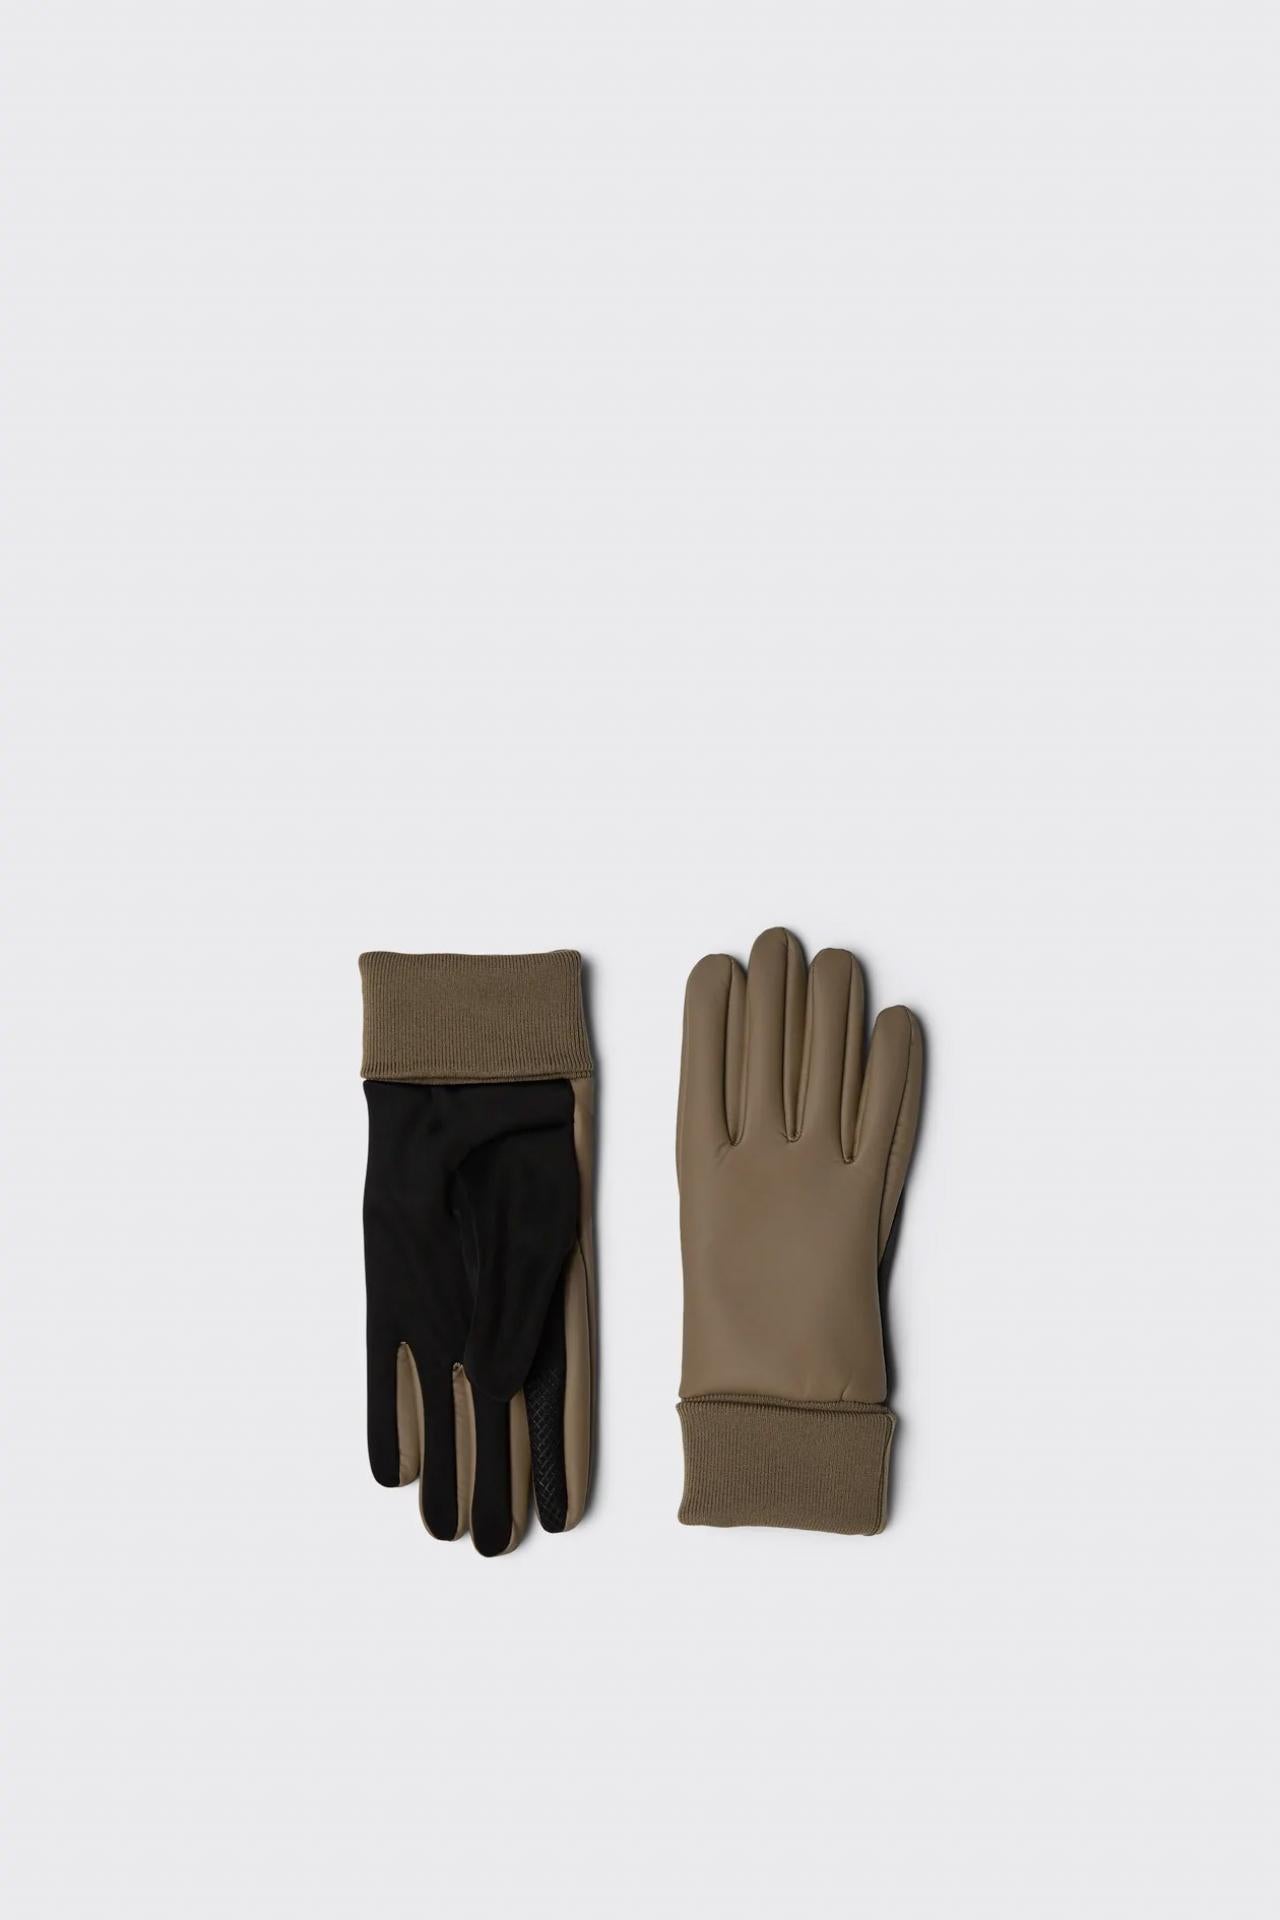 Rains Gloves Handschuhe Wood S